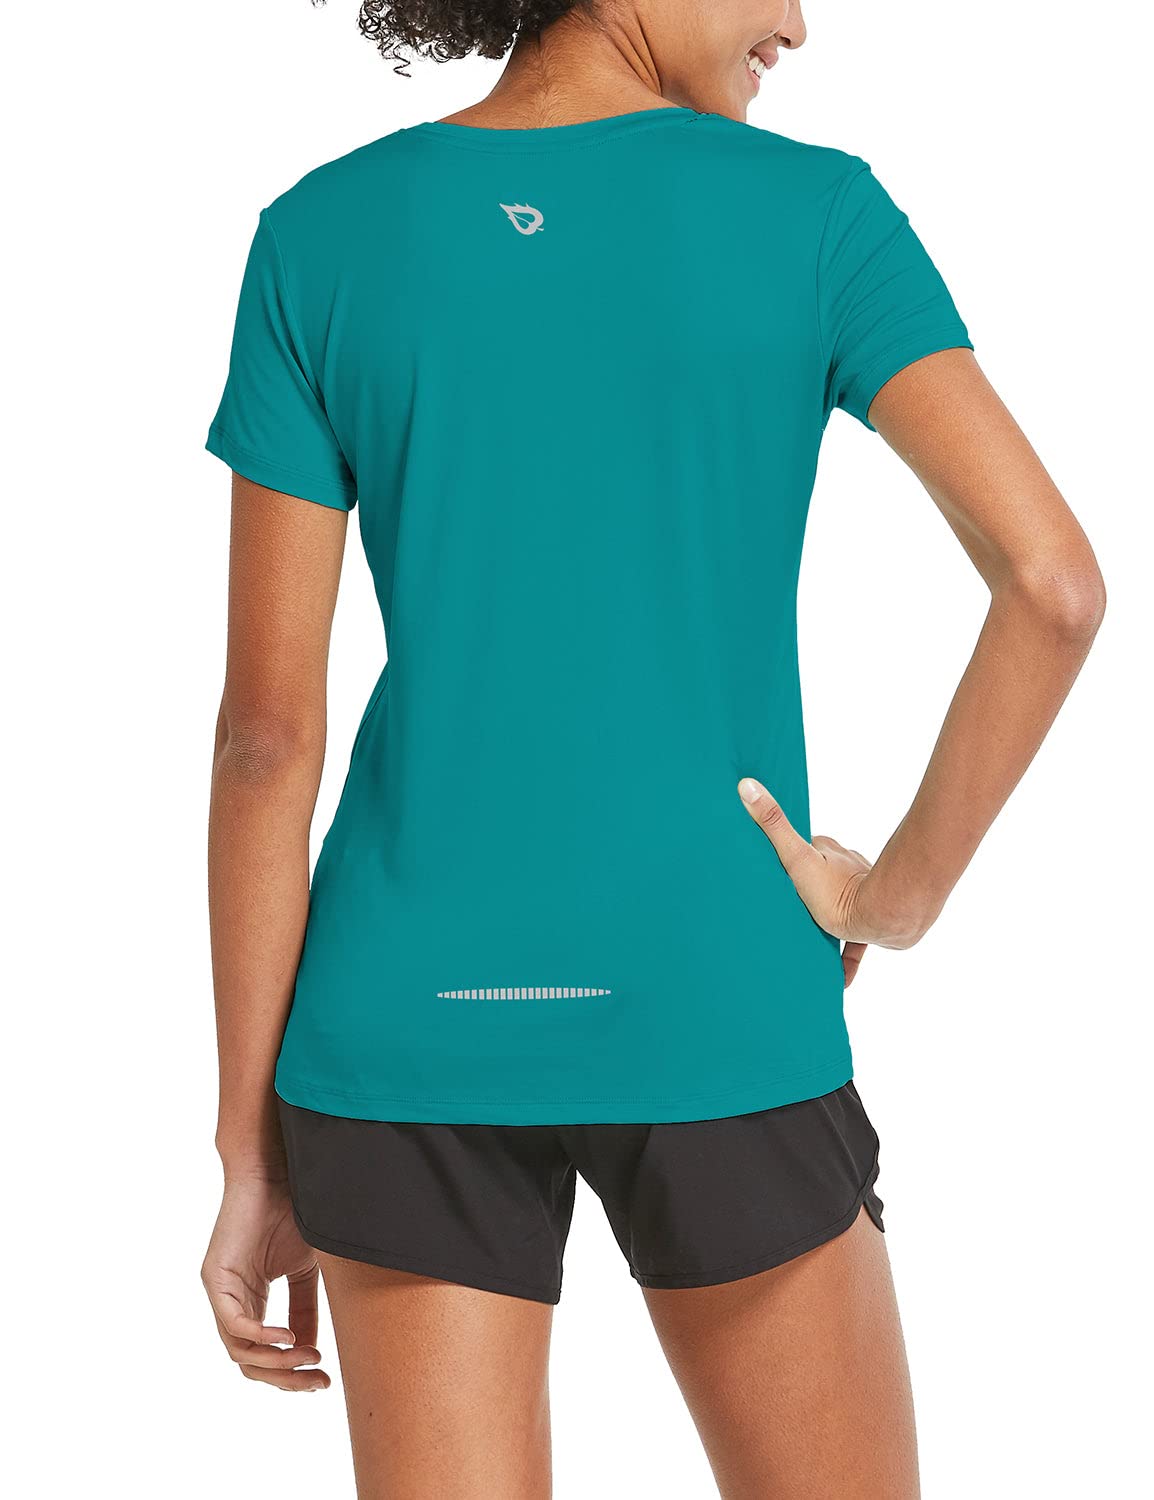 Baleaf BALEAF Women's Sleeveless Workout Shirts Exercise Running Tank Tops  Active Gym Tops Teal Size XL